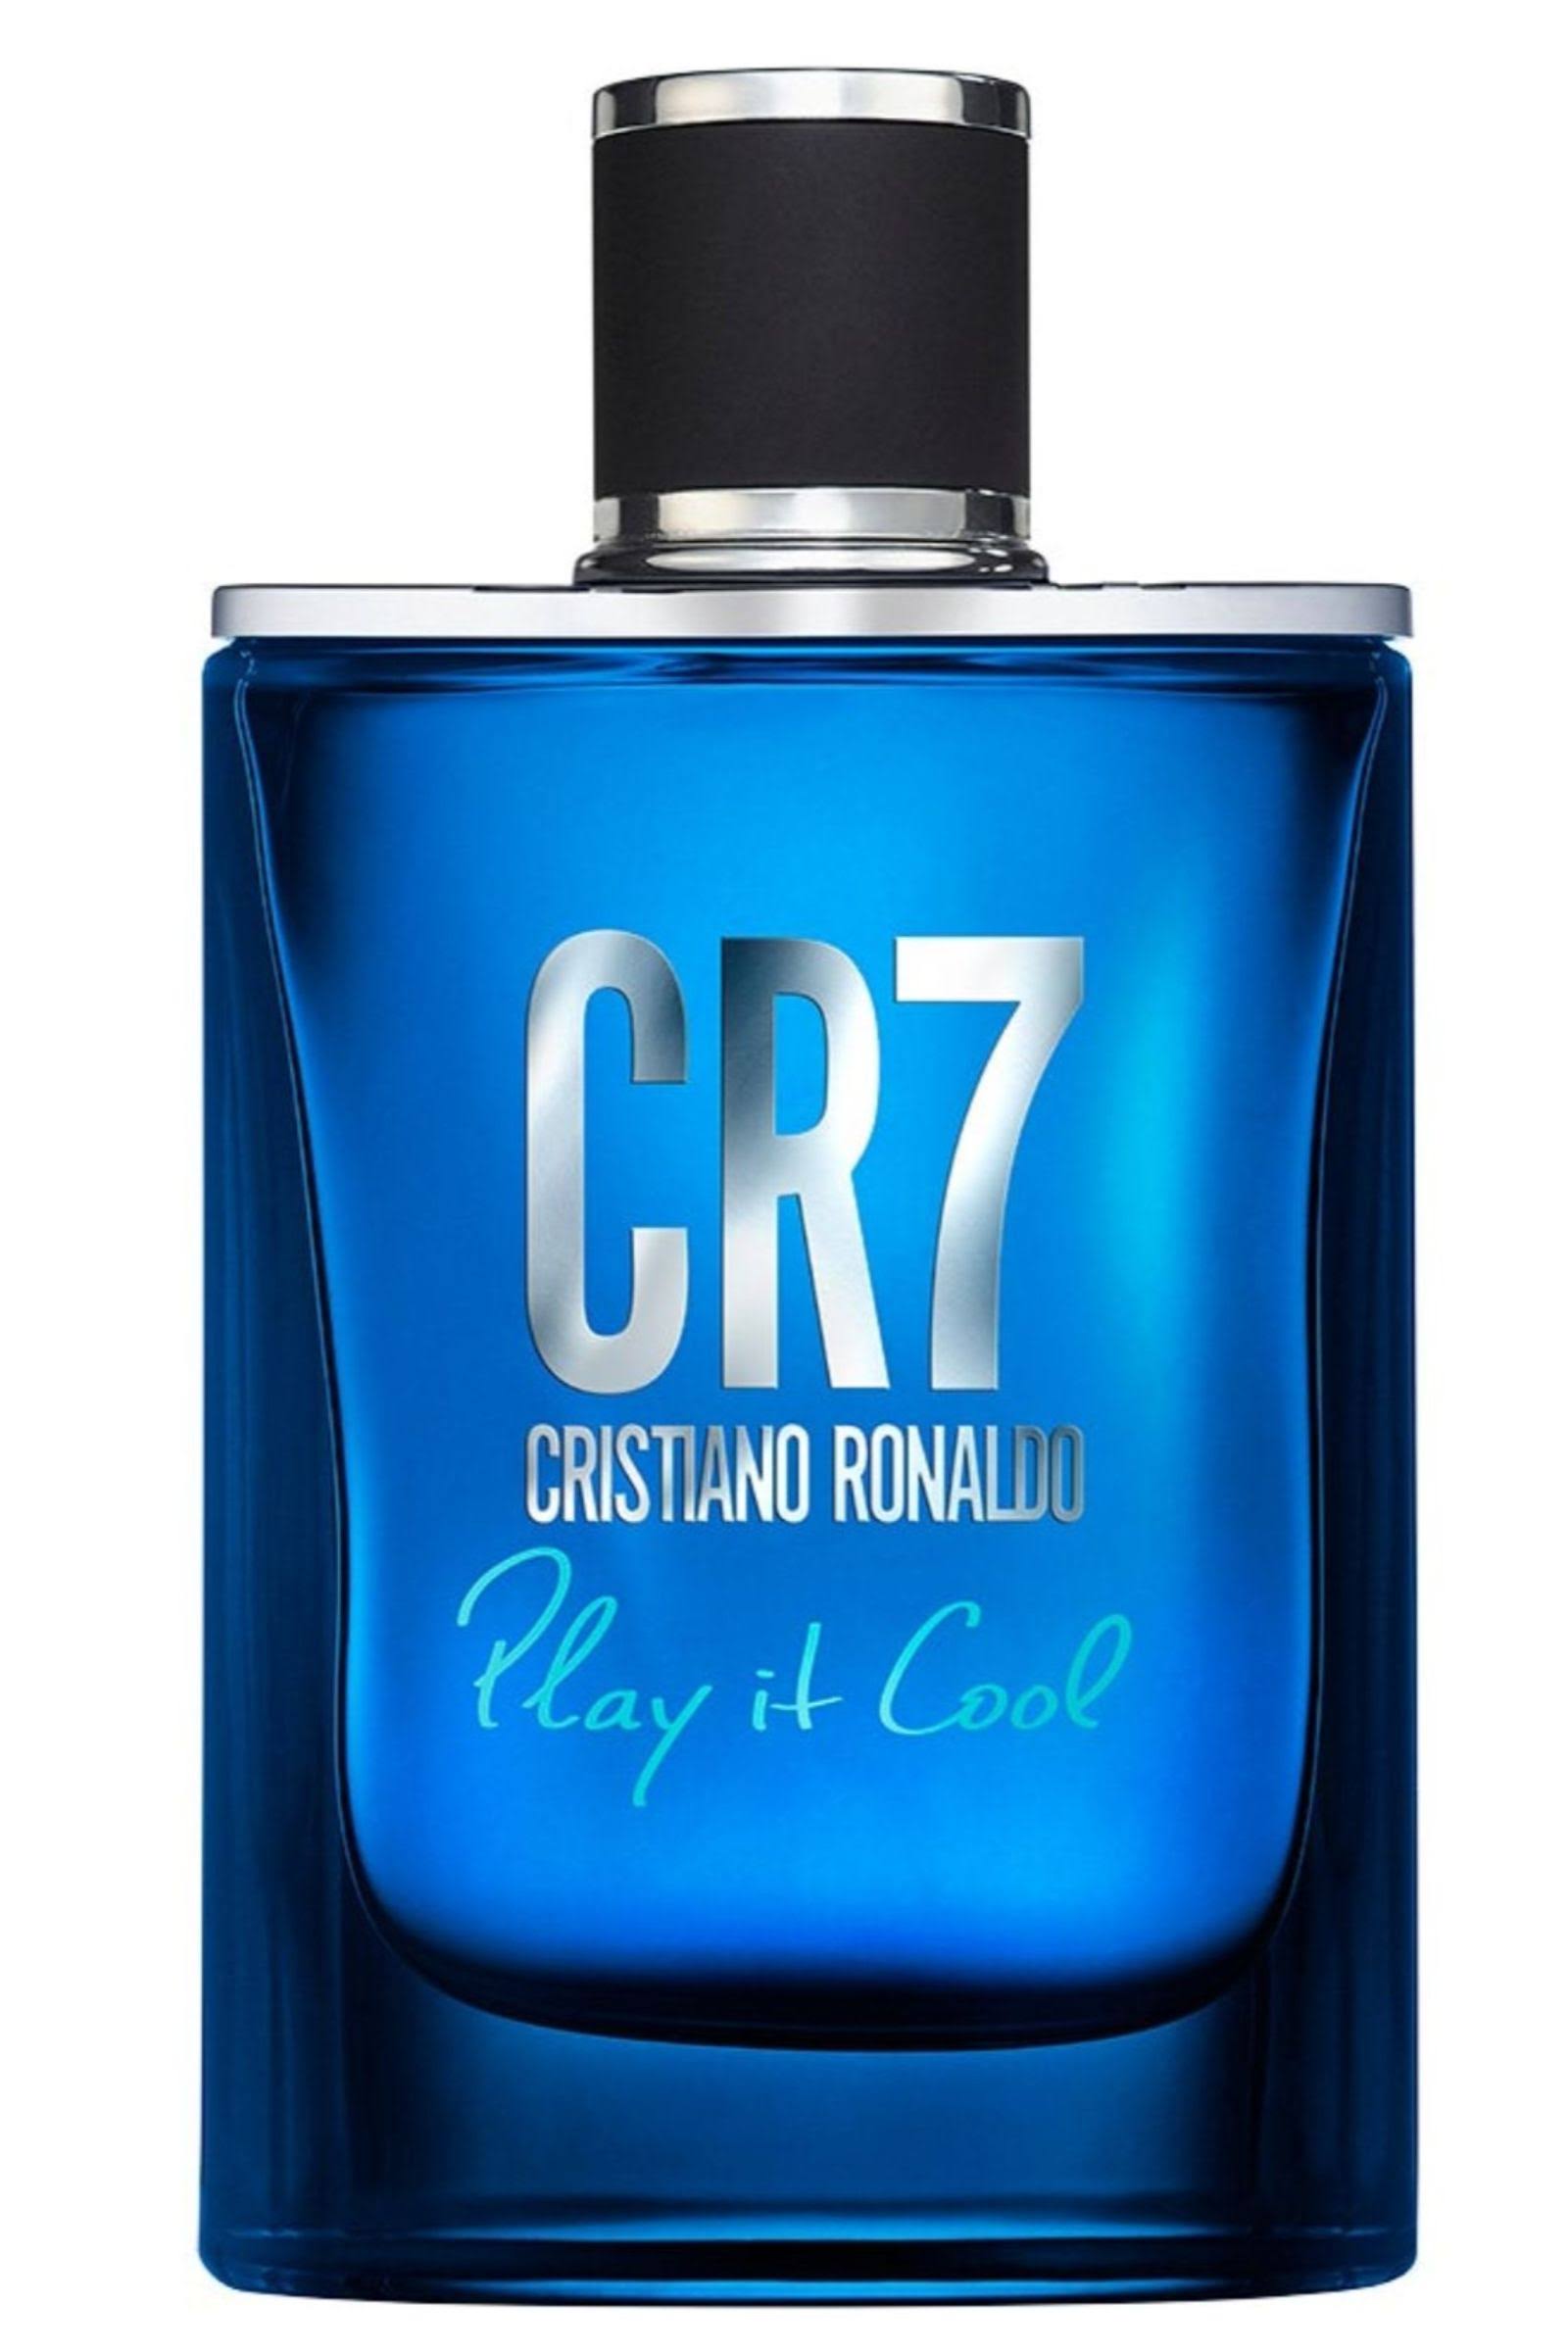 CR7 Play It Cool Cristiano Ronaldo Eau de Toilette Spray 50ml